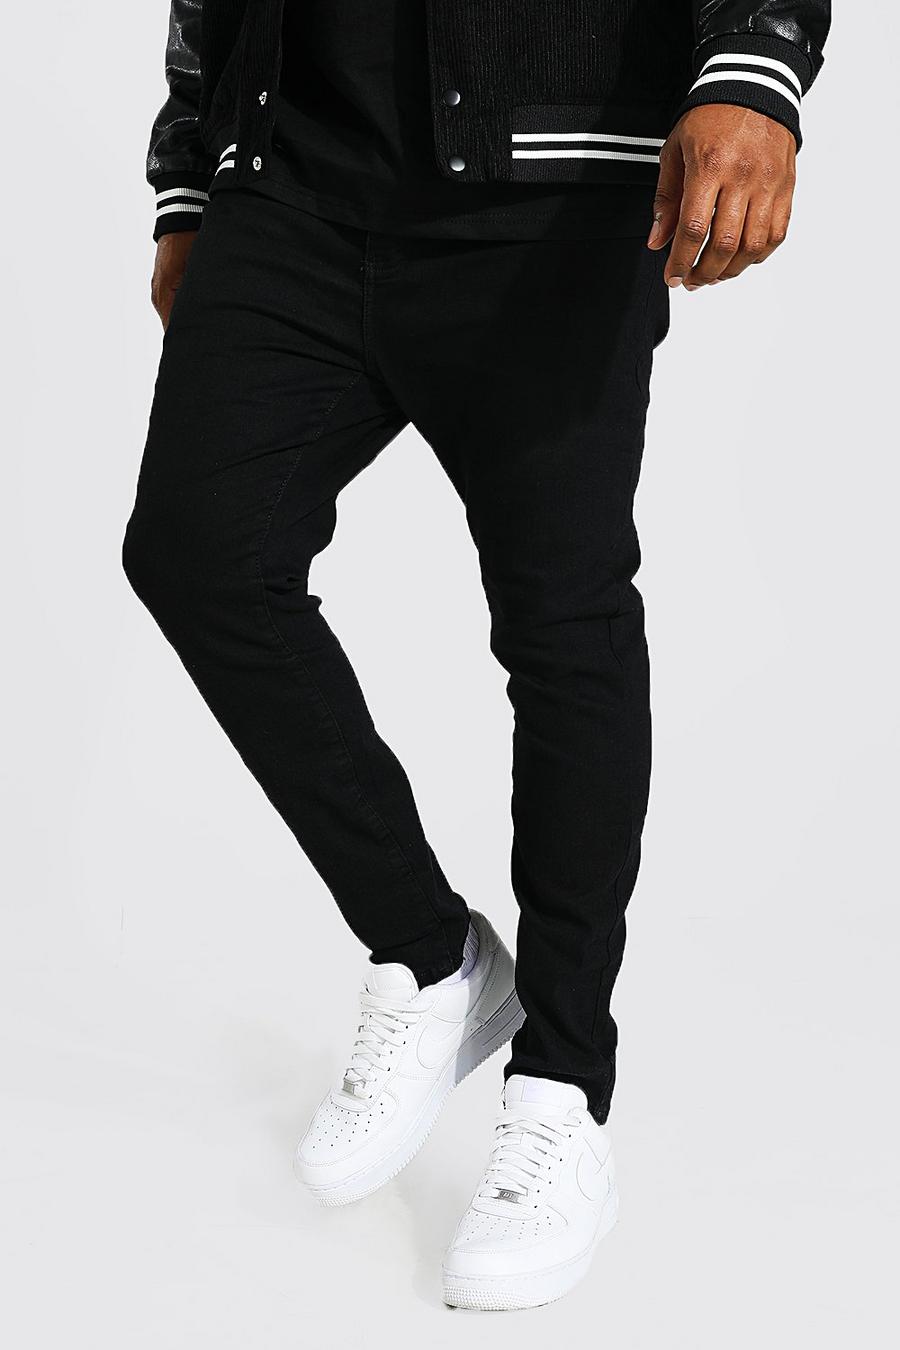 Black Plus Size Super Skinny Jeans